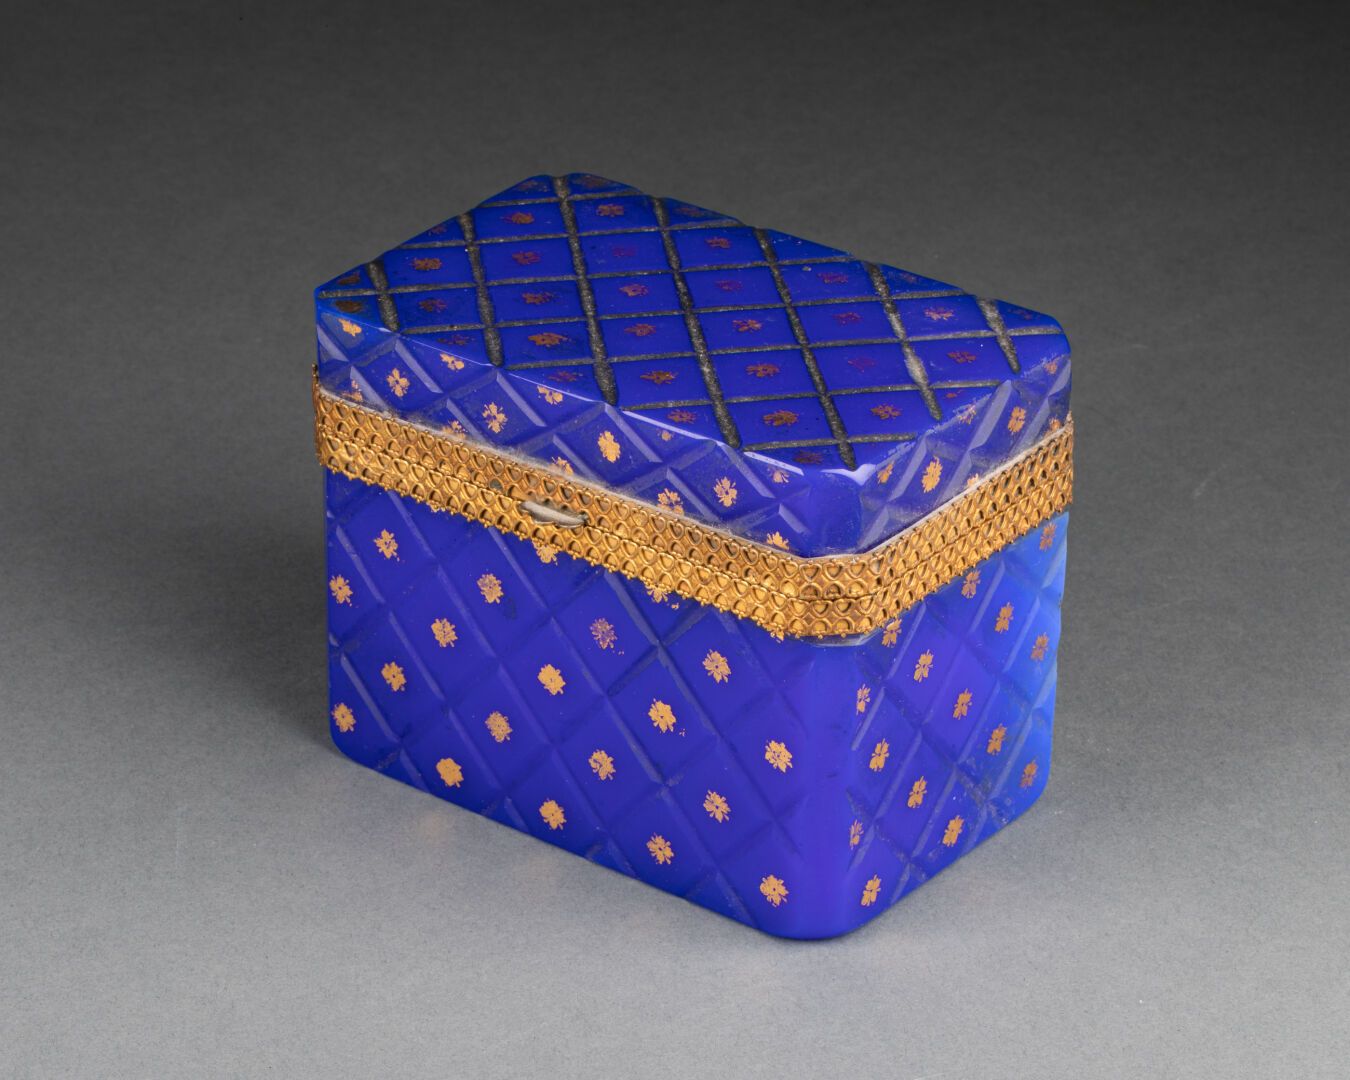 Null 长方形珠宝盒，上面刻有菱形图案的四叶形装饰。

蓝调乳白玻璃

H.10 cm - W. 13 cm - D. 8 cm

轻微损坏、磨损和撕裂